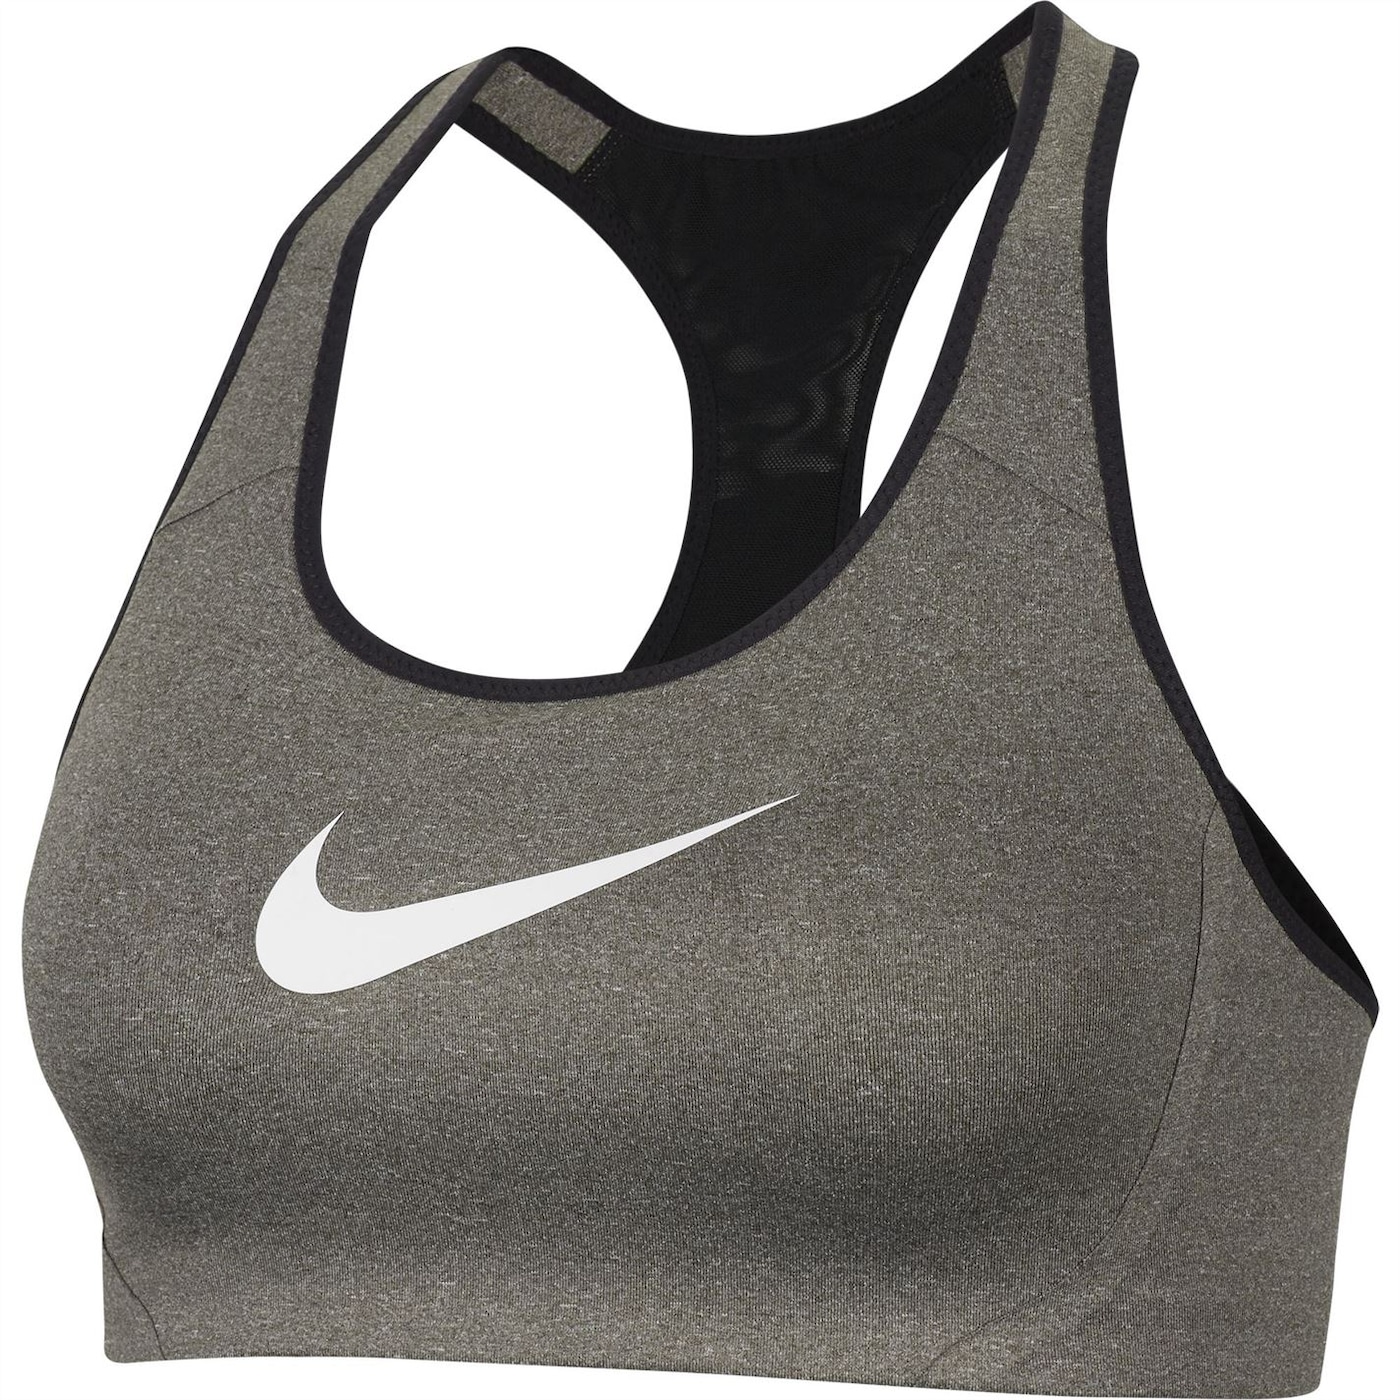 Жени  Дамско облекло  Бельо  Сутиени  Спортни сутиени Nike Victory Shape Sports Bra Ladies 1402295-7606390